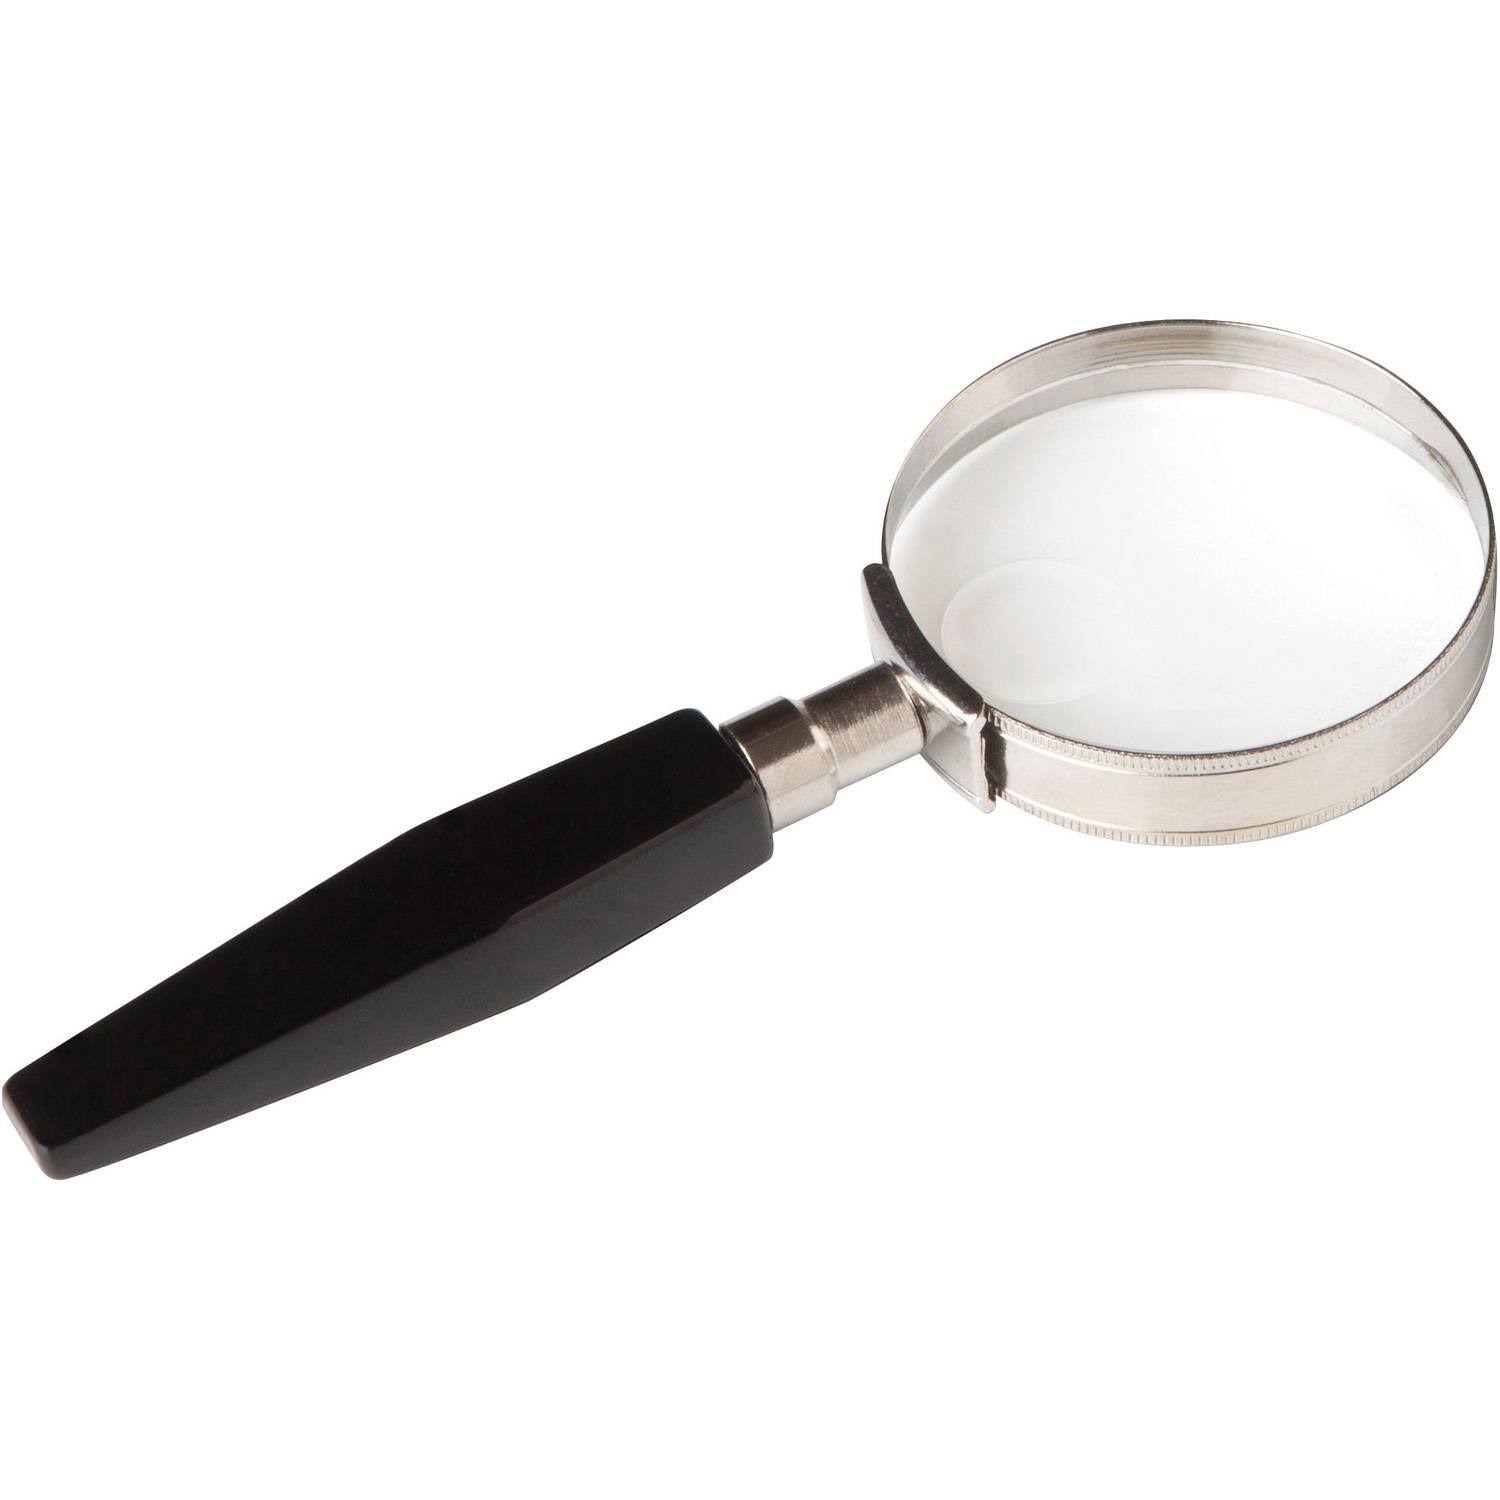 Denco Round Magnifier - 2"